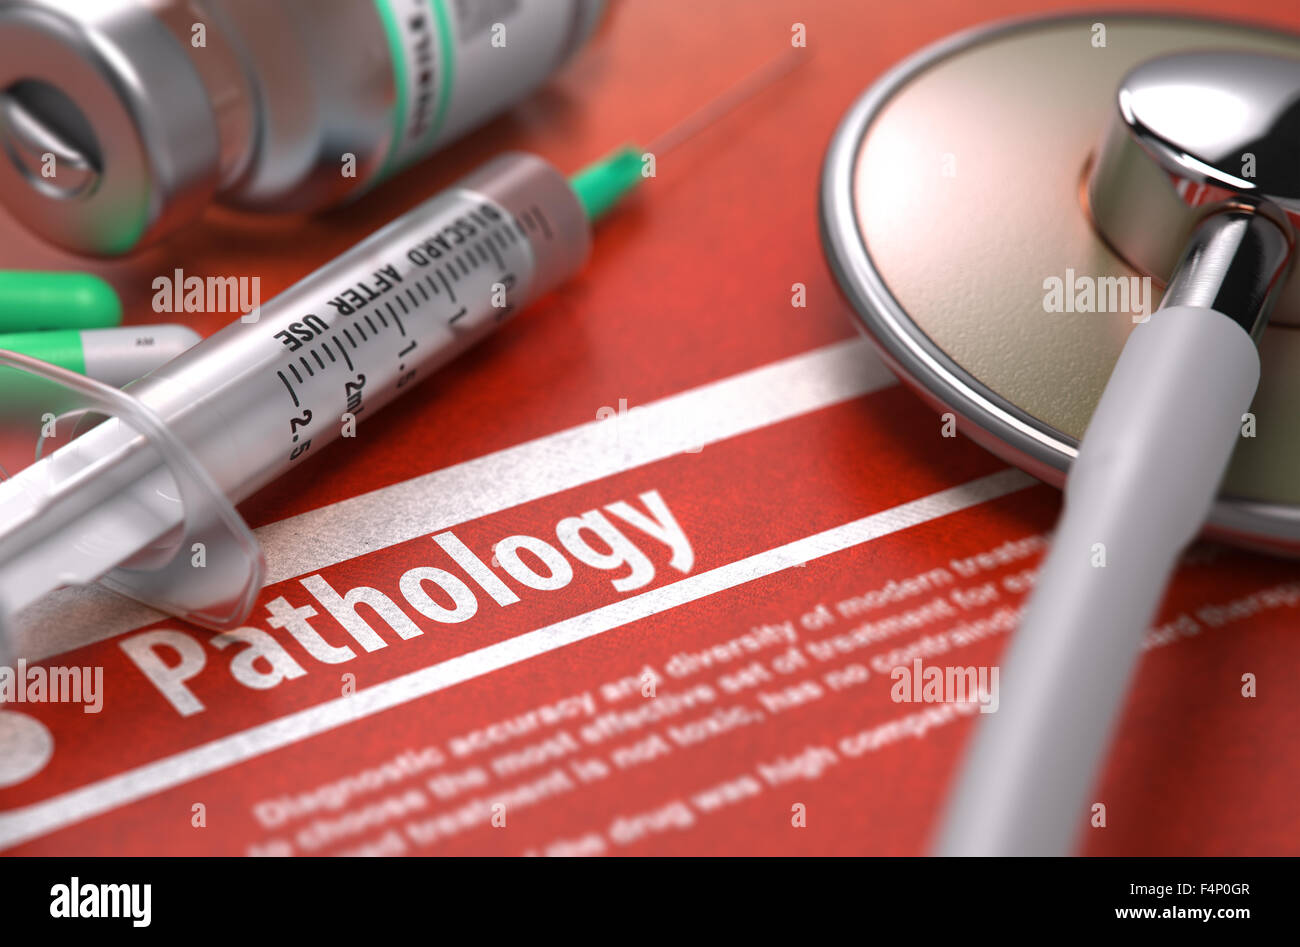 Pathology - Medical Concept on Orange Background and Medical Composition - Stethoscope, Pills and Syringe. Blurred Image. Stock Photo